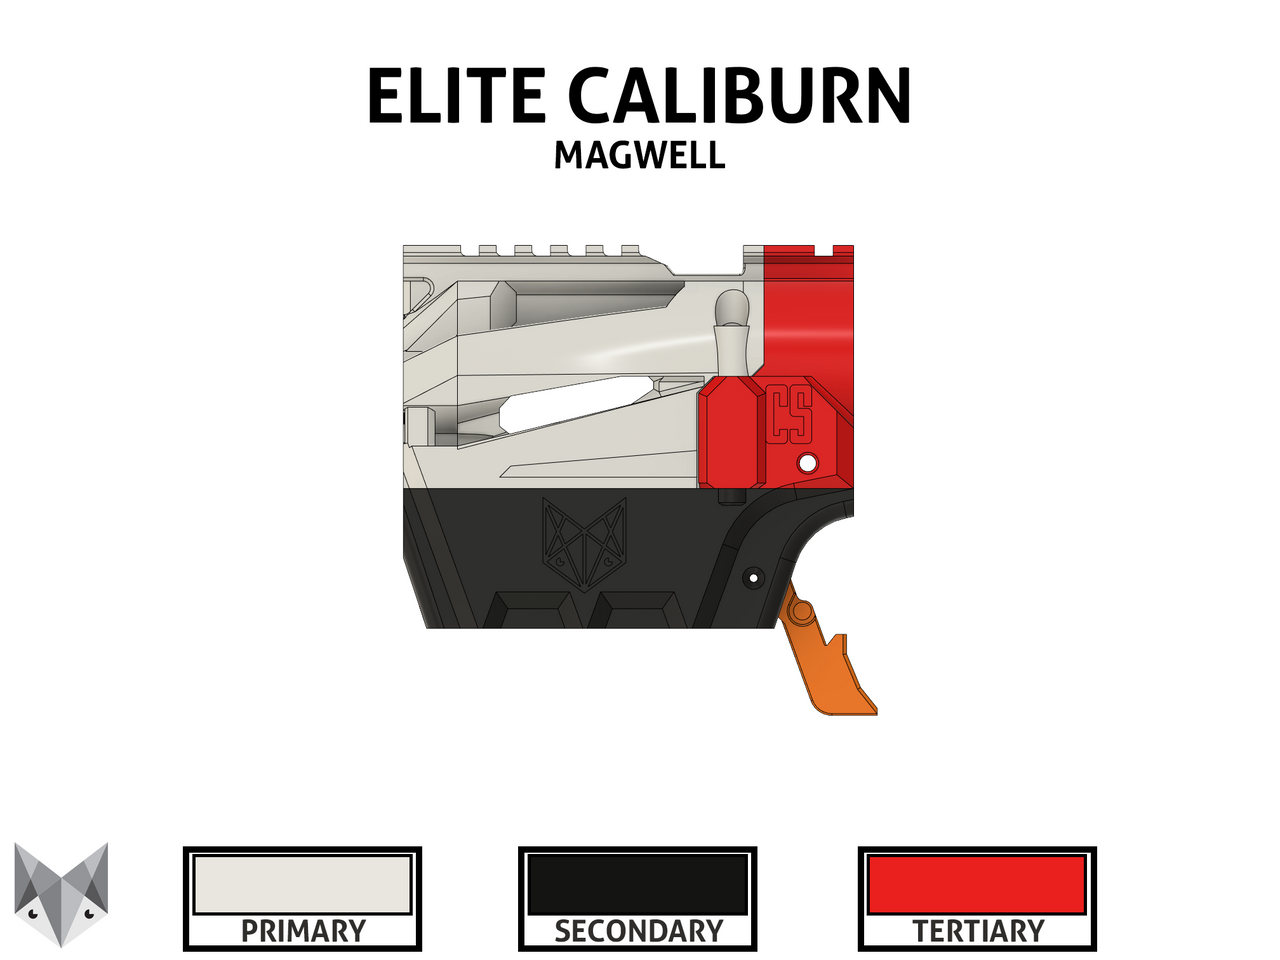 Elite Caliburn Magwell Replacement (Captain Slug)